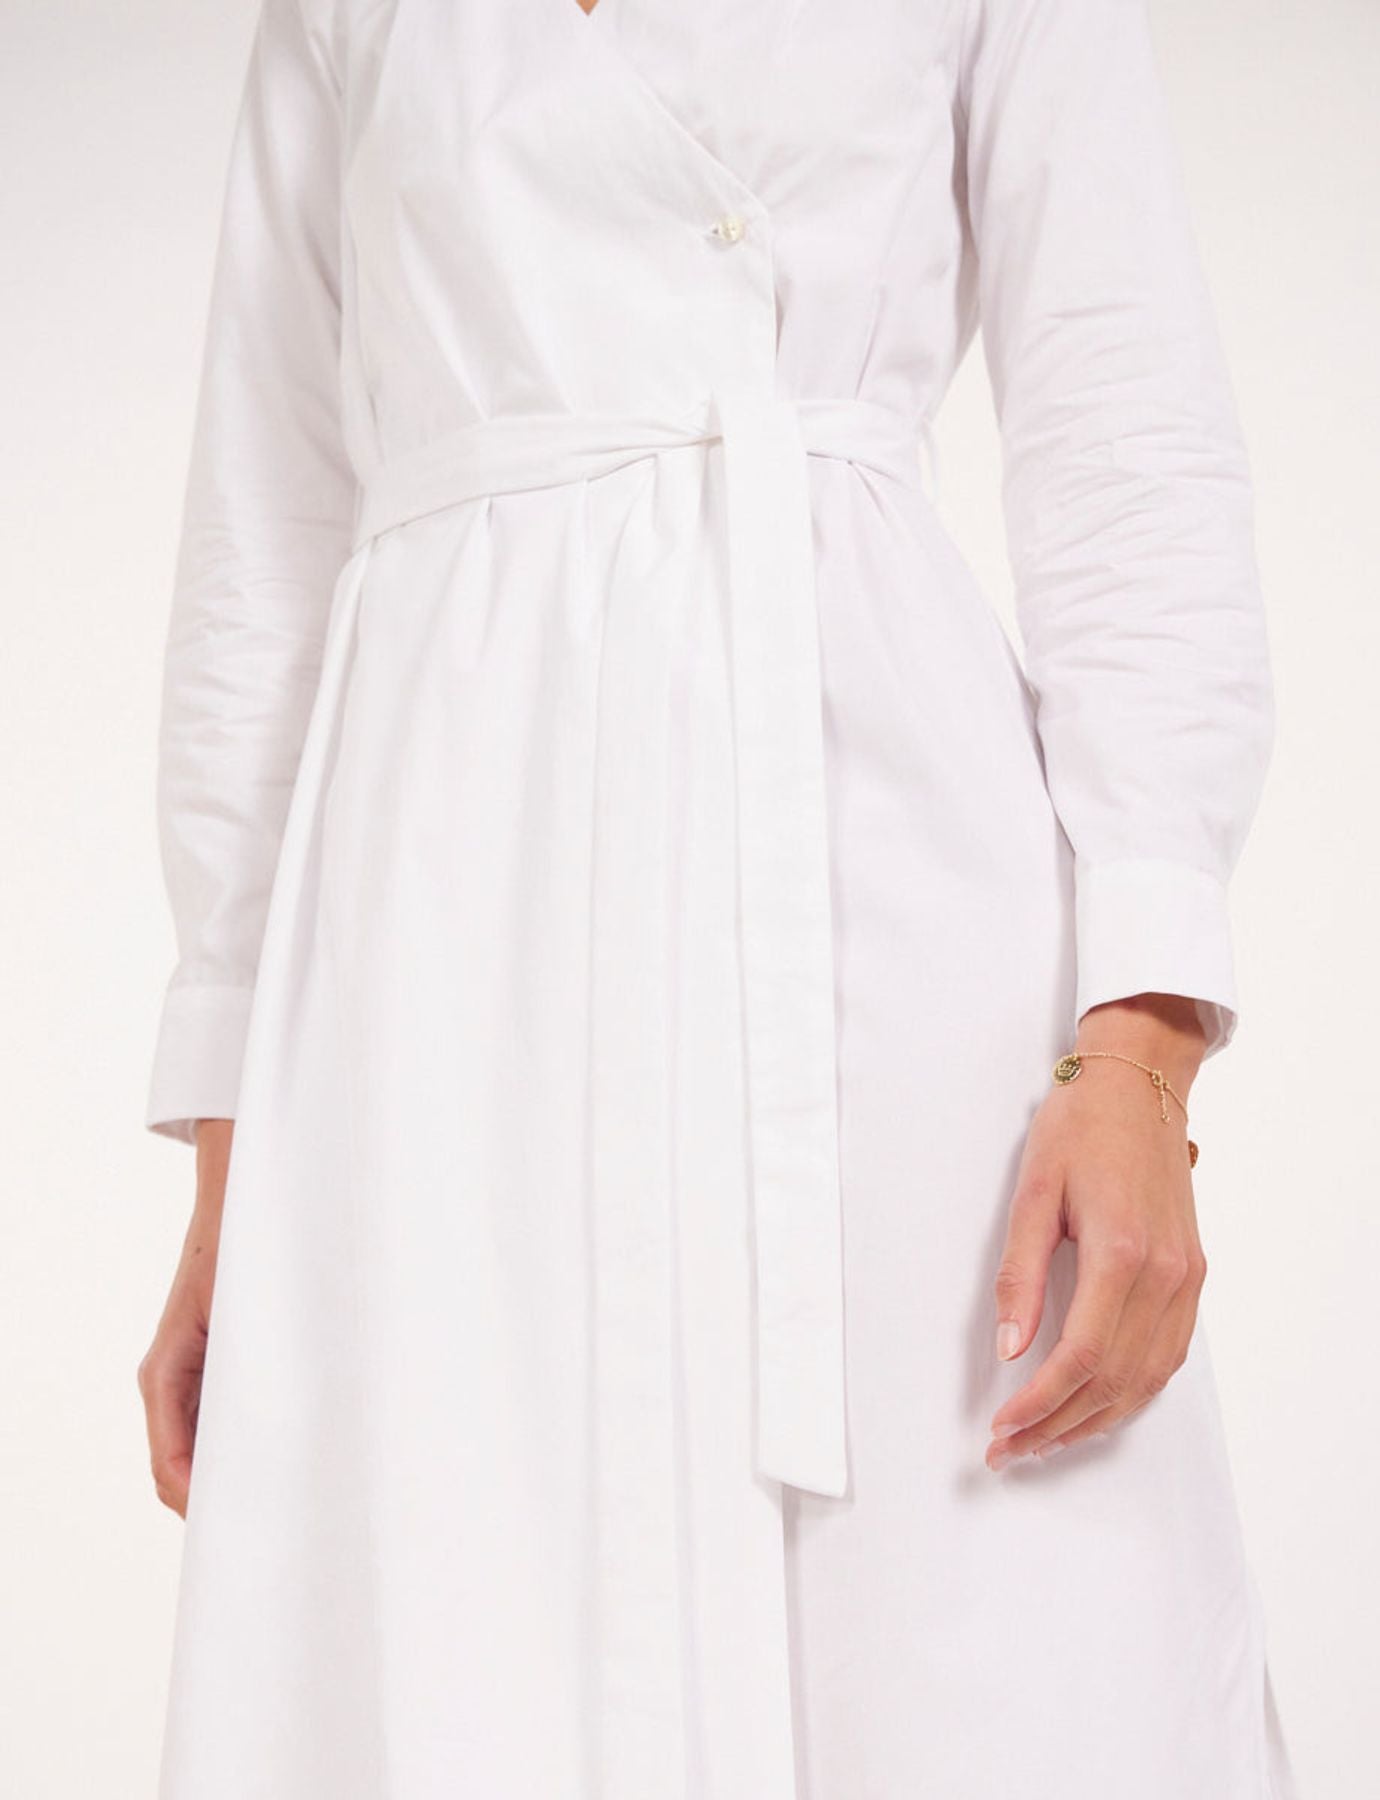 dress jodie-cotton-white